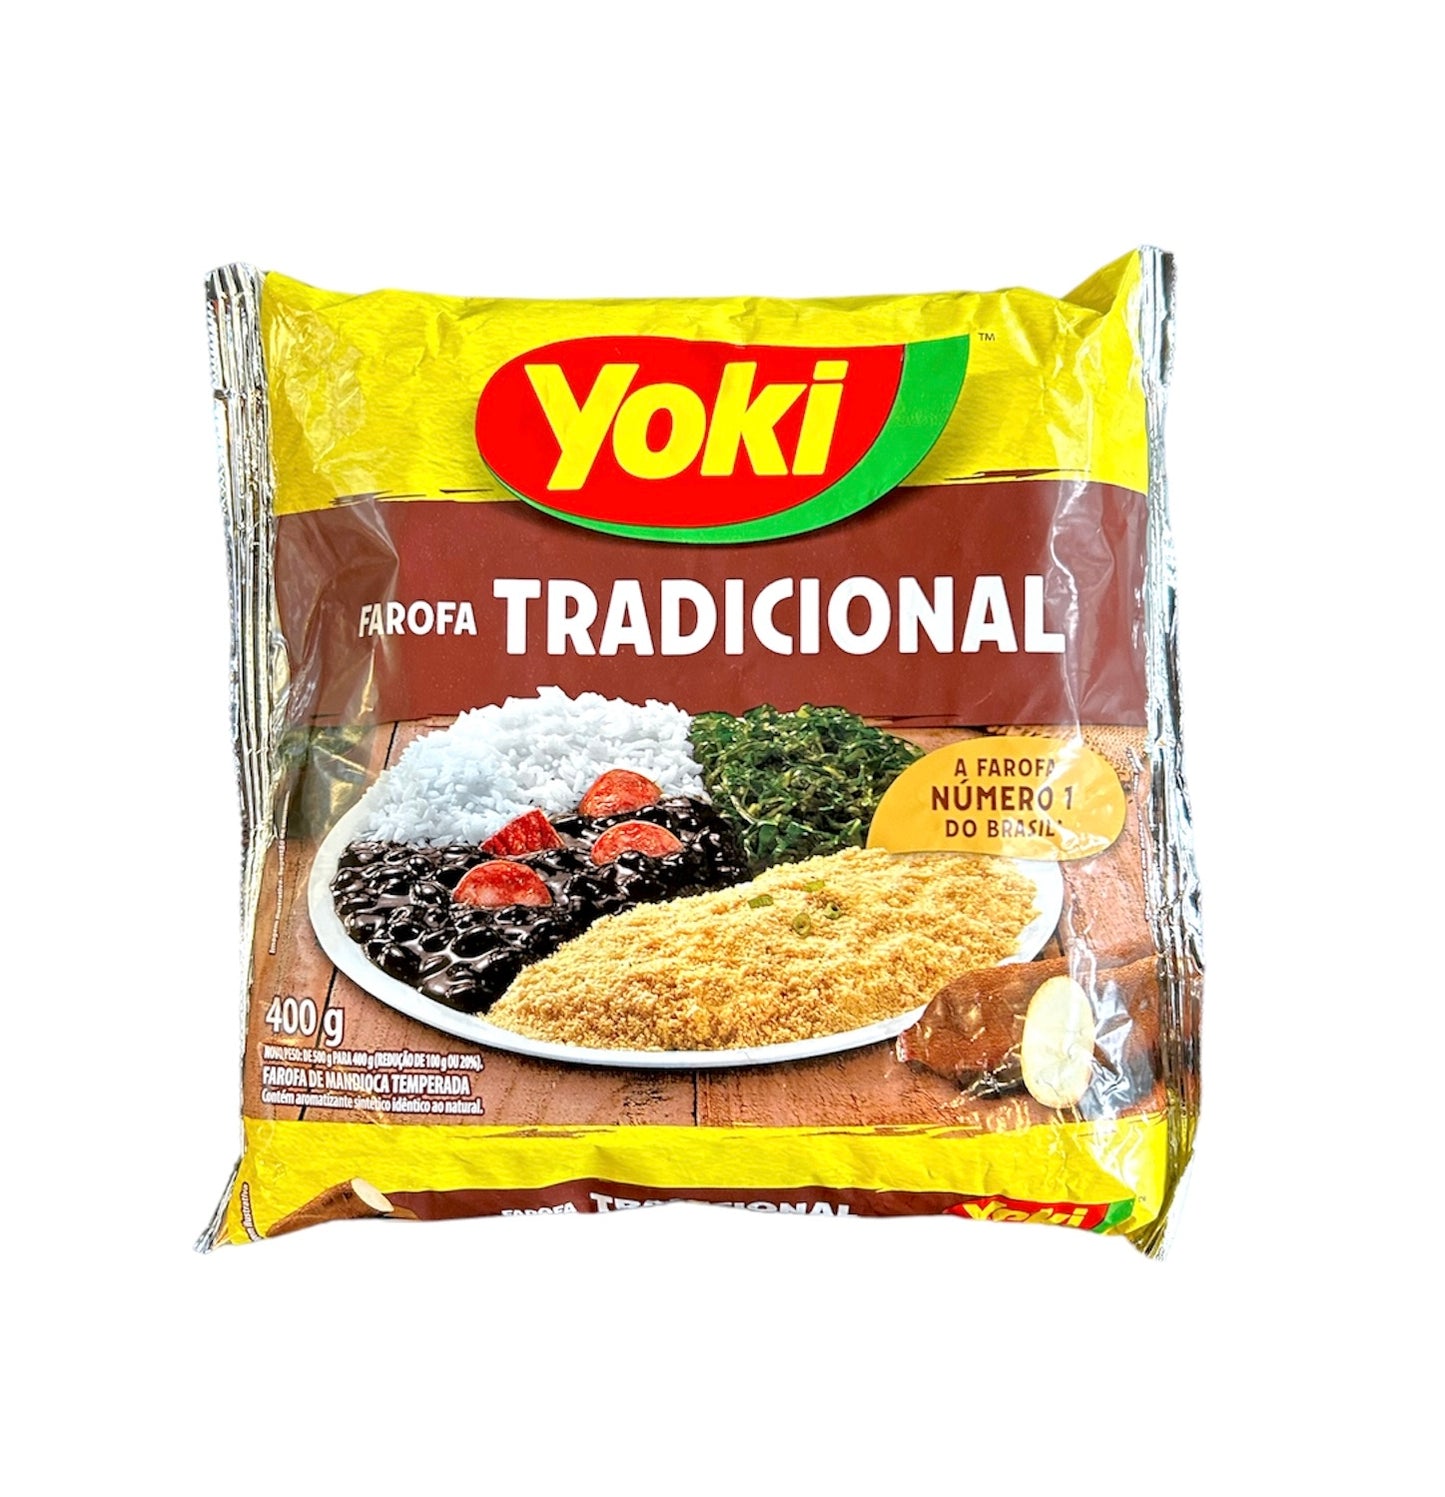 Yoki Seasoned Cassava Flour Tradicional | Farofa de Mandioca Pronta Tradicional Yoki